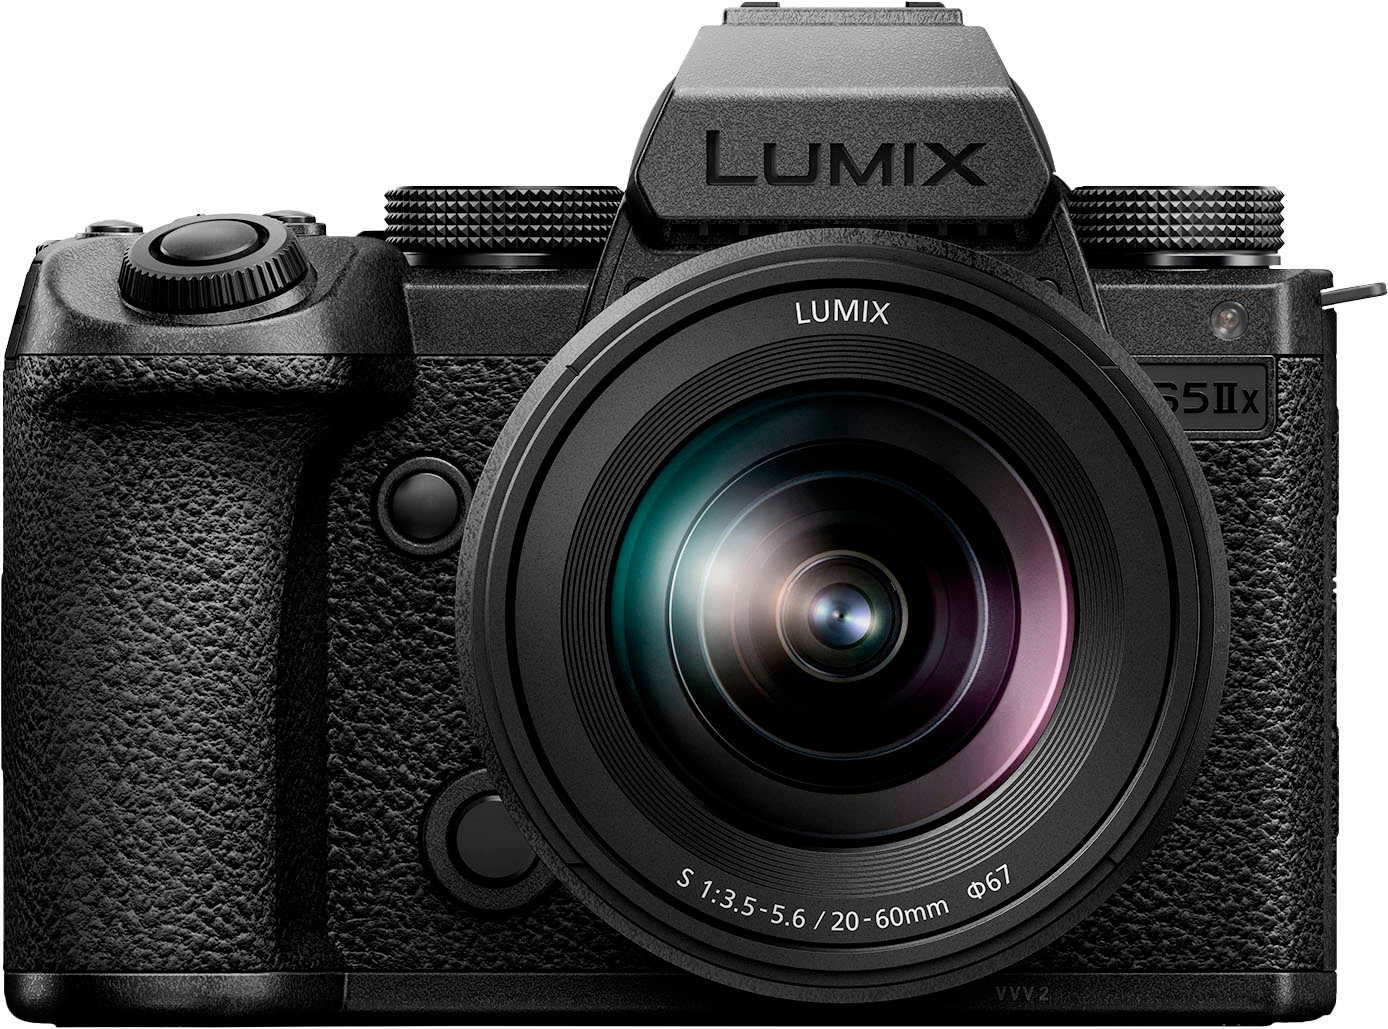 Panasonic LUMIX S5IIX Mirrorless Camera with 20-60mm F3.5-5.6 L 